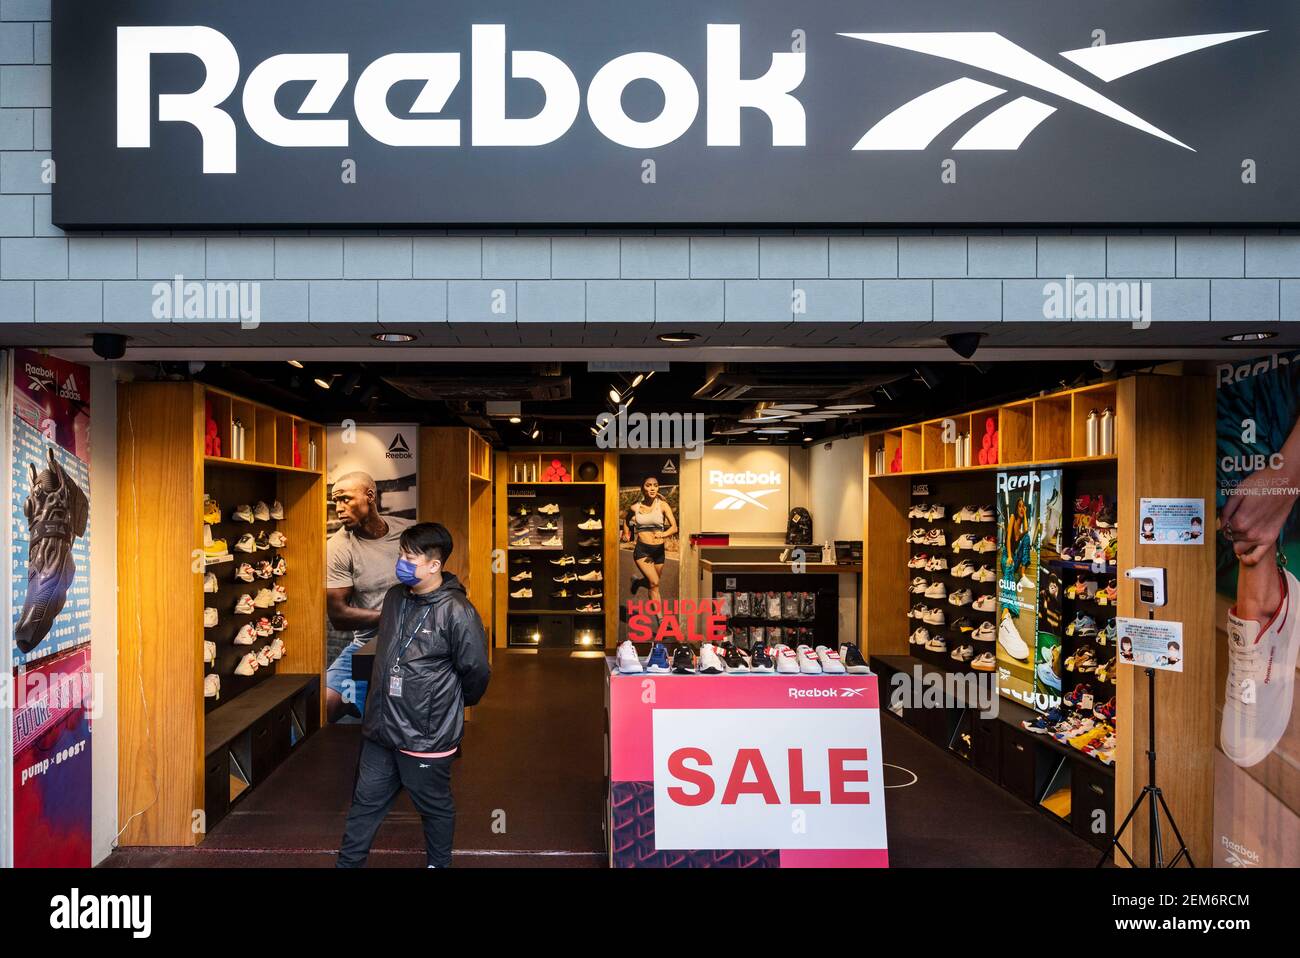 reebok store toronto Off 68% - www.loverethymno.com